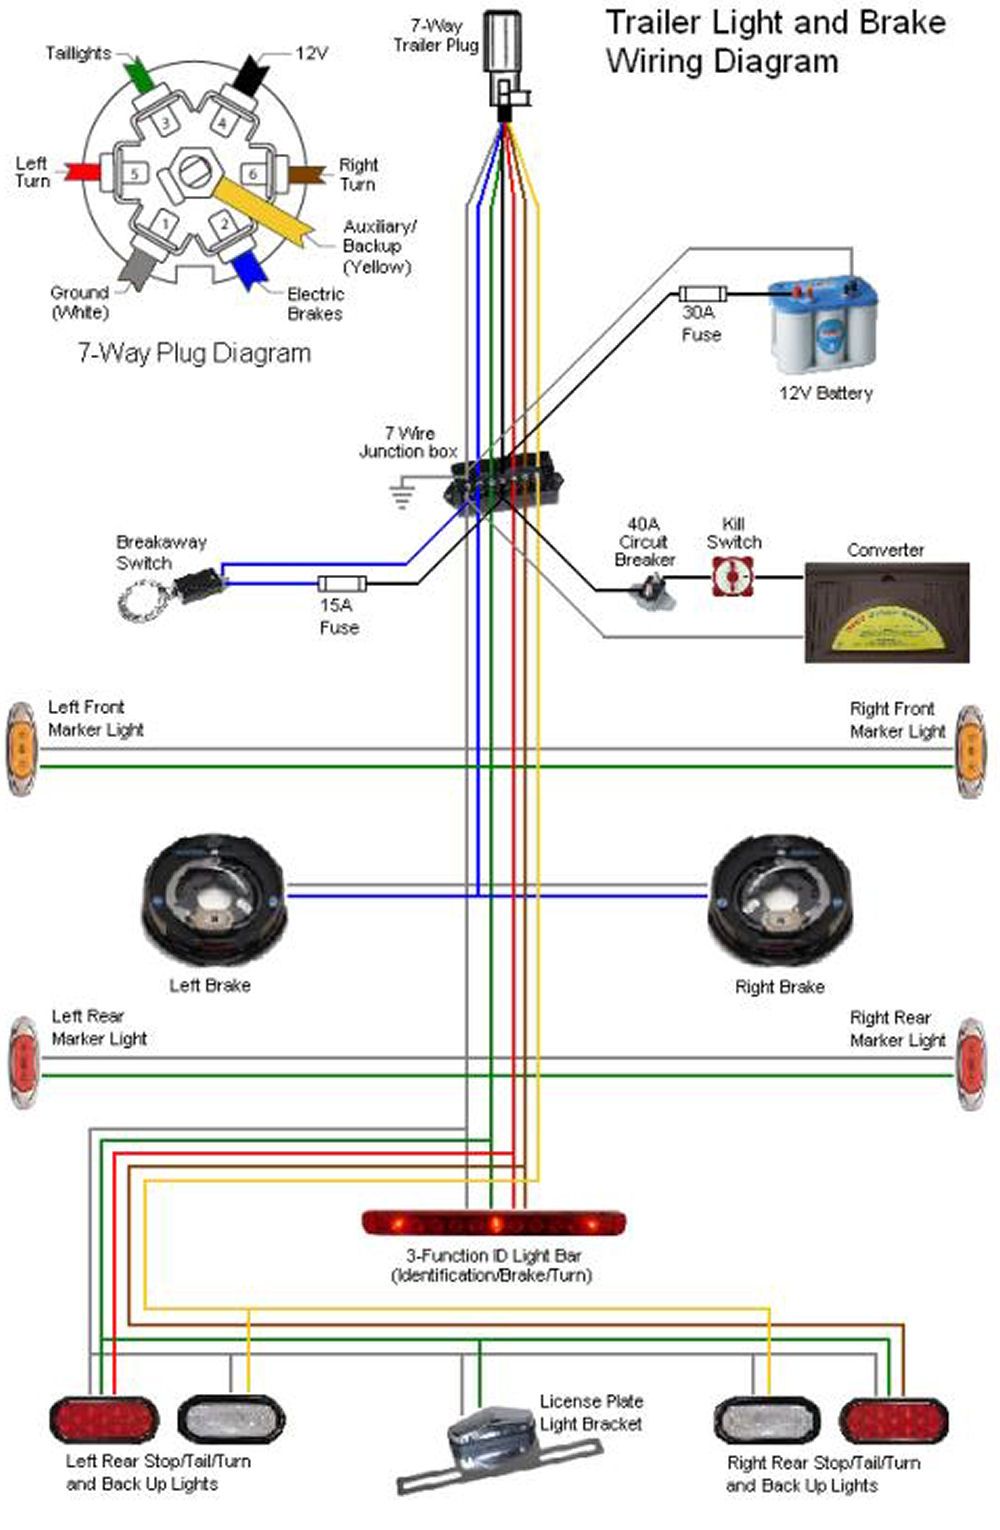 Trailer Wiring Diagram 7 Way Trailer Plug